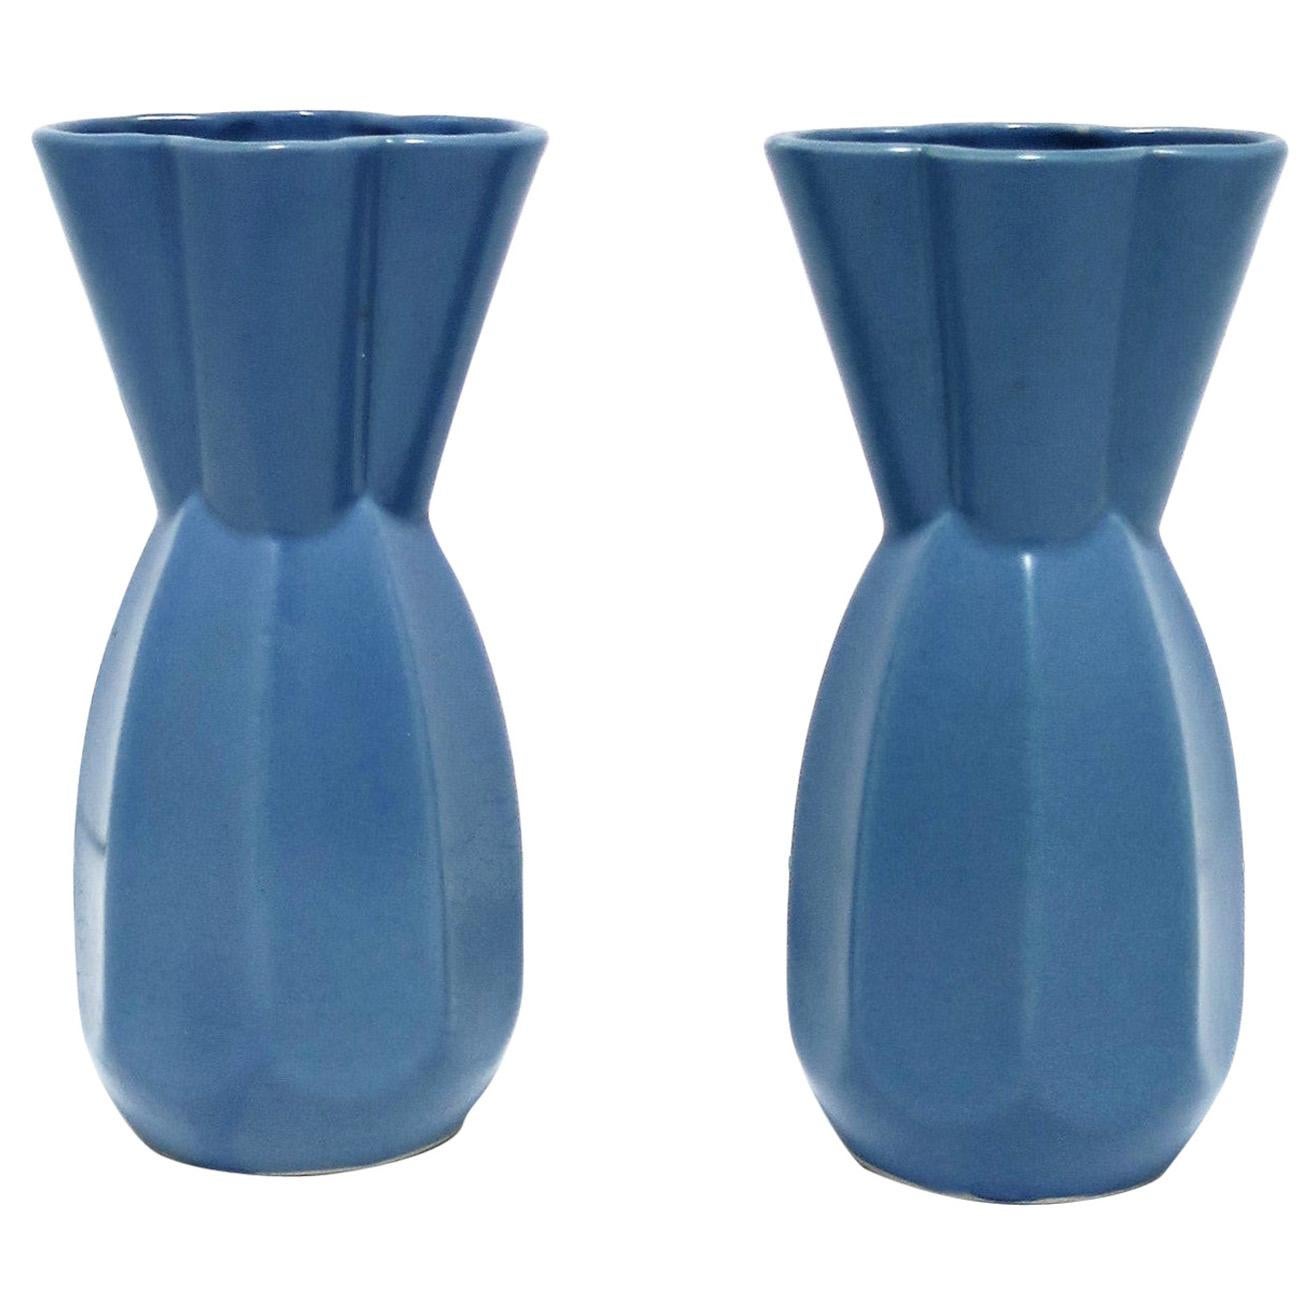 Japanese Ceramic Blue Vases, Pair 